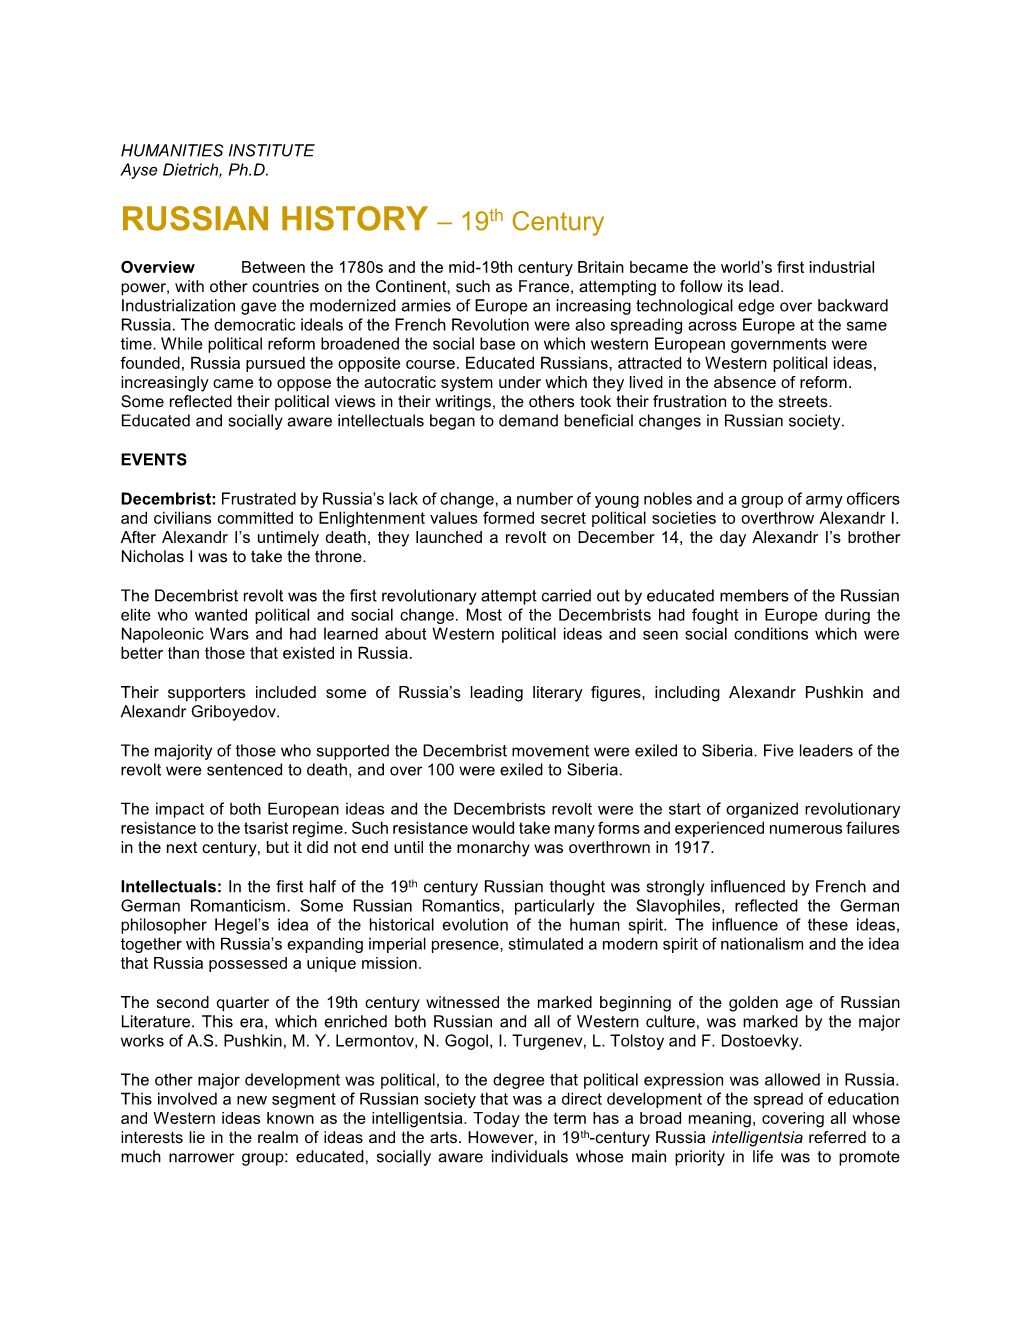 RUSSIAN HISTORY – 19Th Century